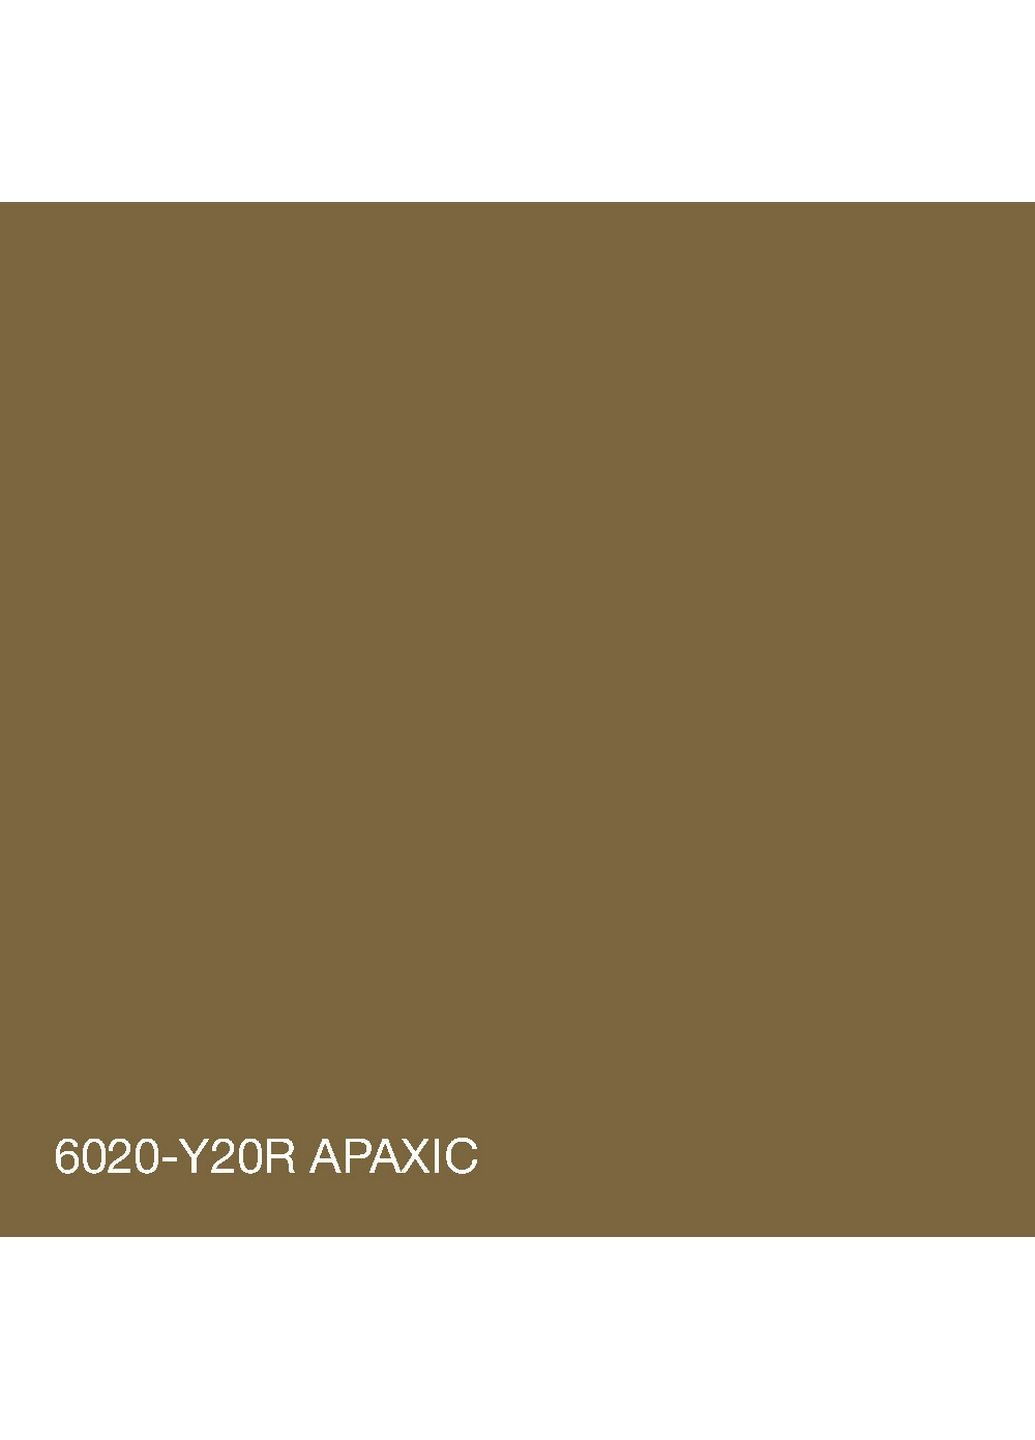 Фасадна фарба акрил-латексна 6020-Y20R 5 л SkyLine (283326578)